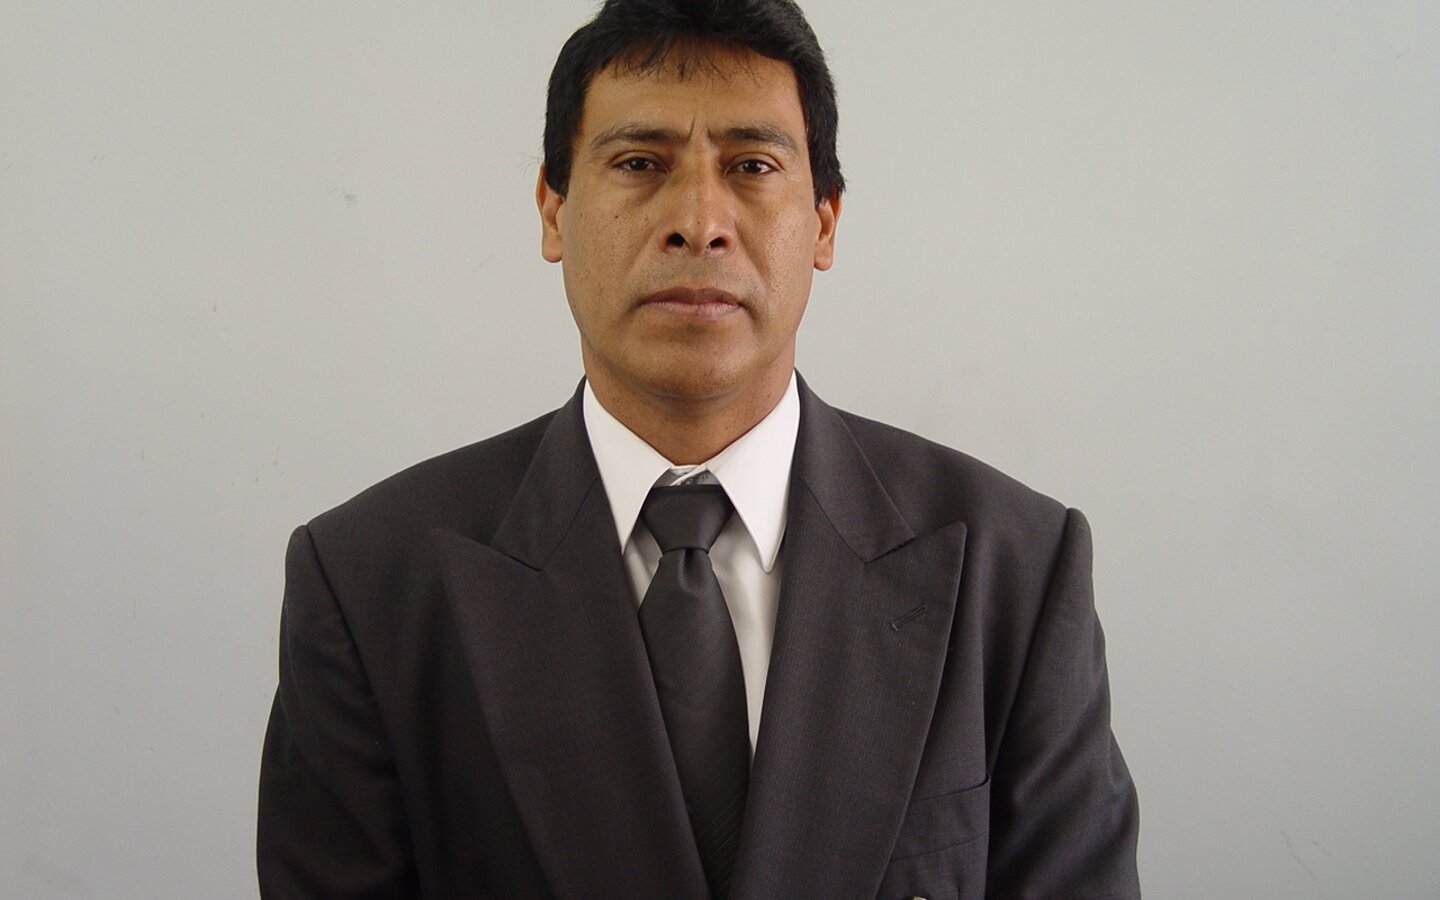 Mtro. Jaime Almaguer, Profesor Investigador del Dpto. de Física del @udg_cucei.
Jefe de la Unidad de Difusión CUCEI.